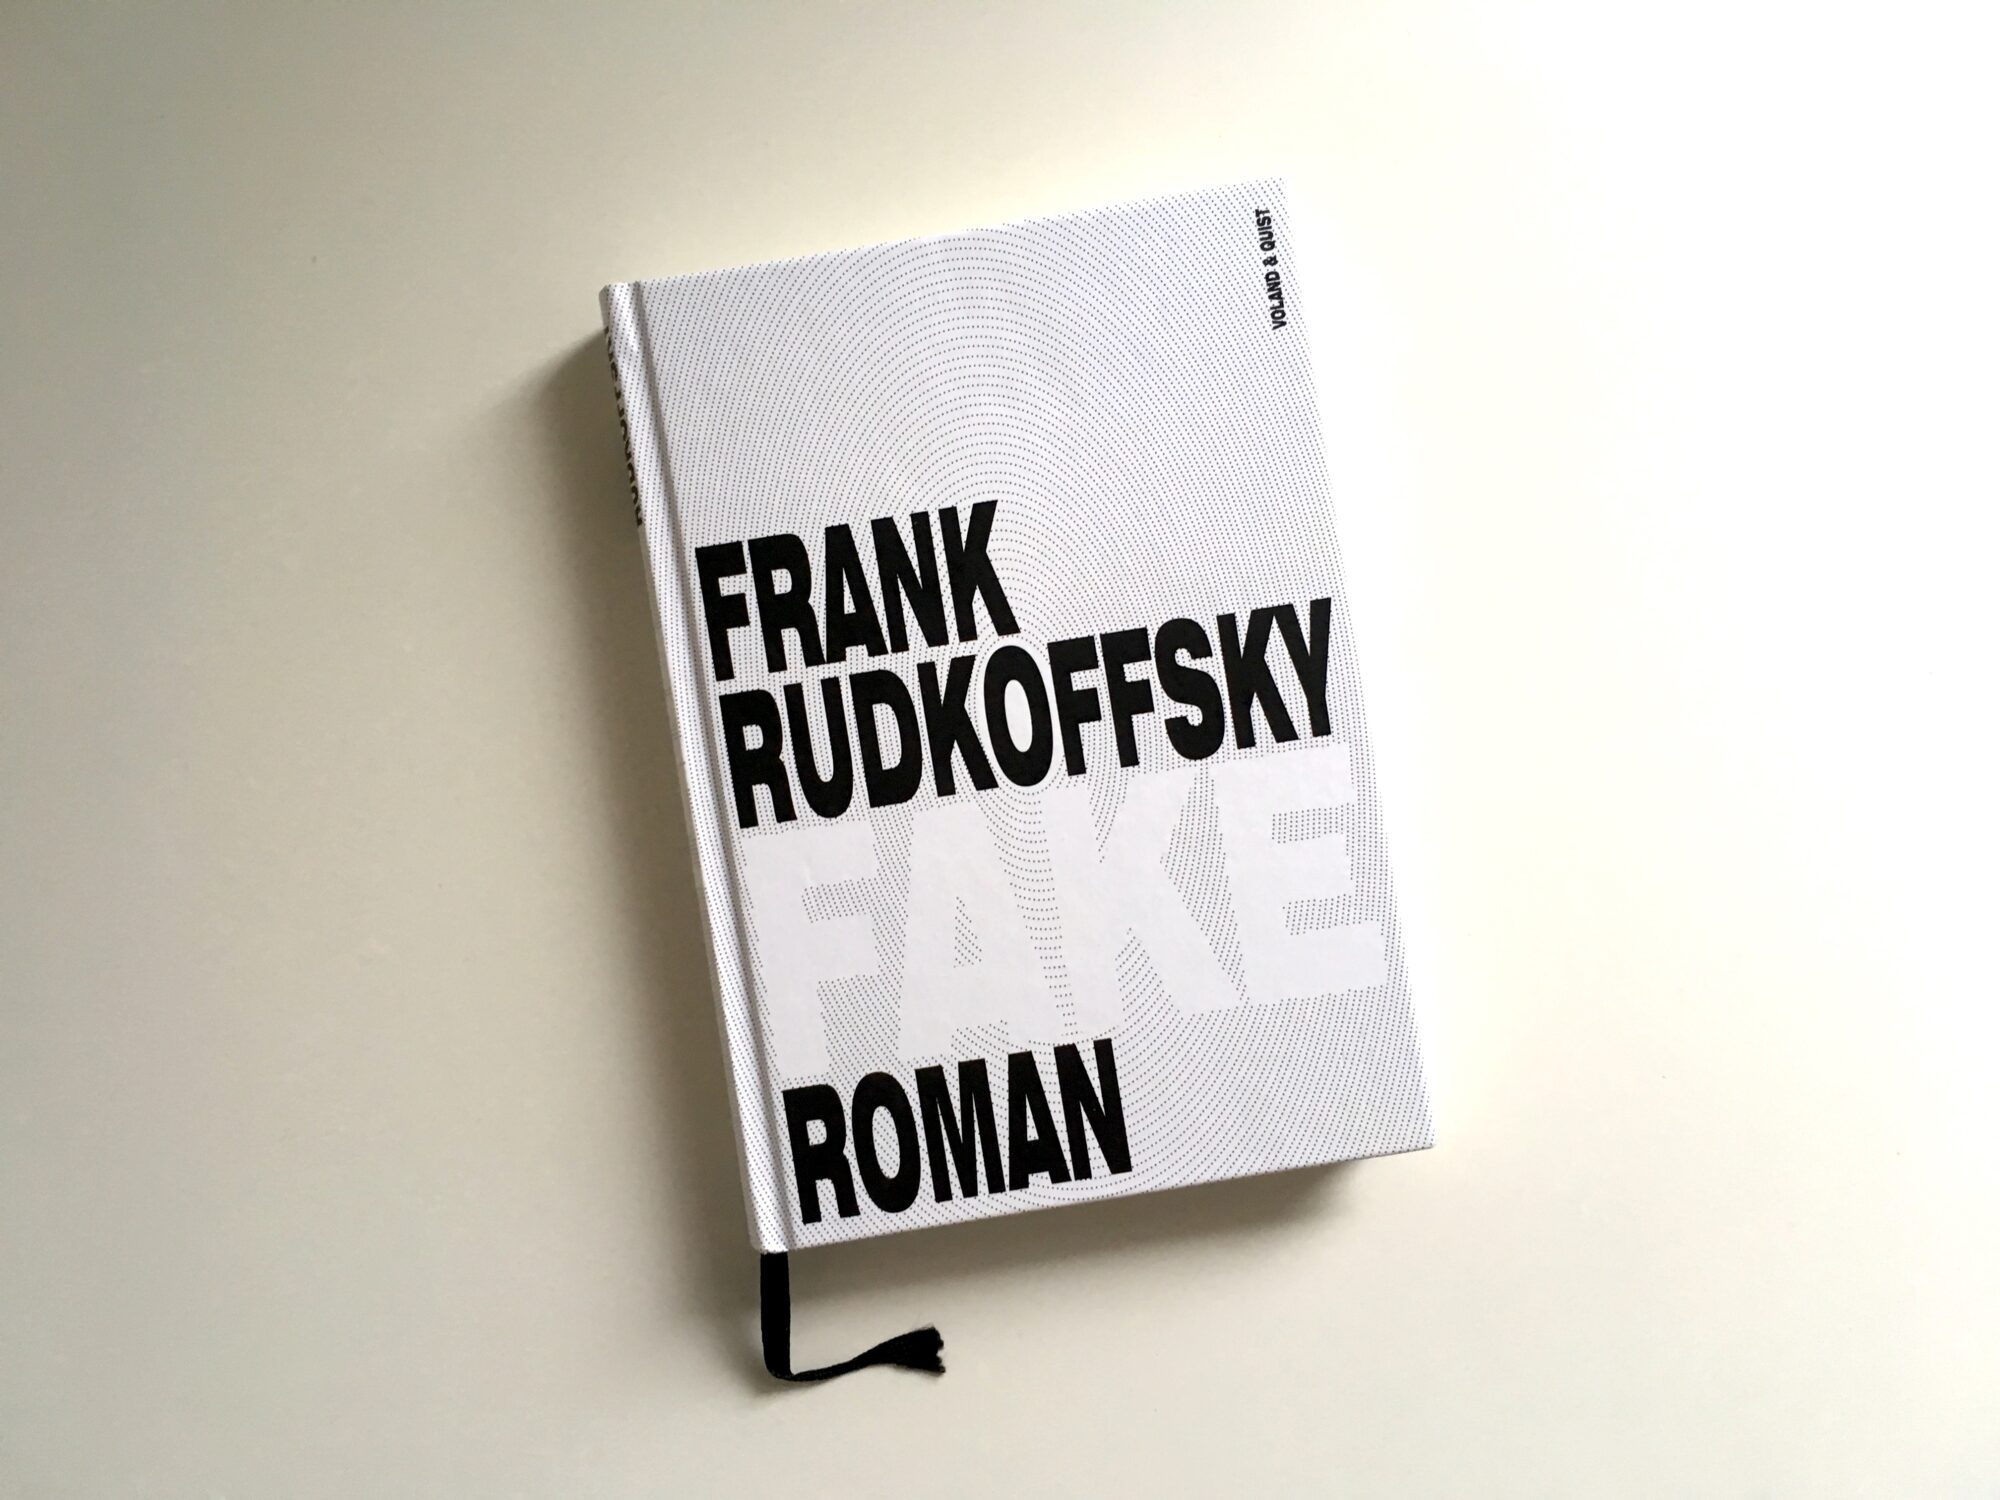 Frank Rudkoffsky: Fake